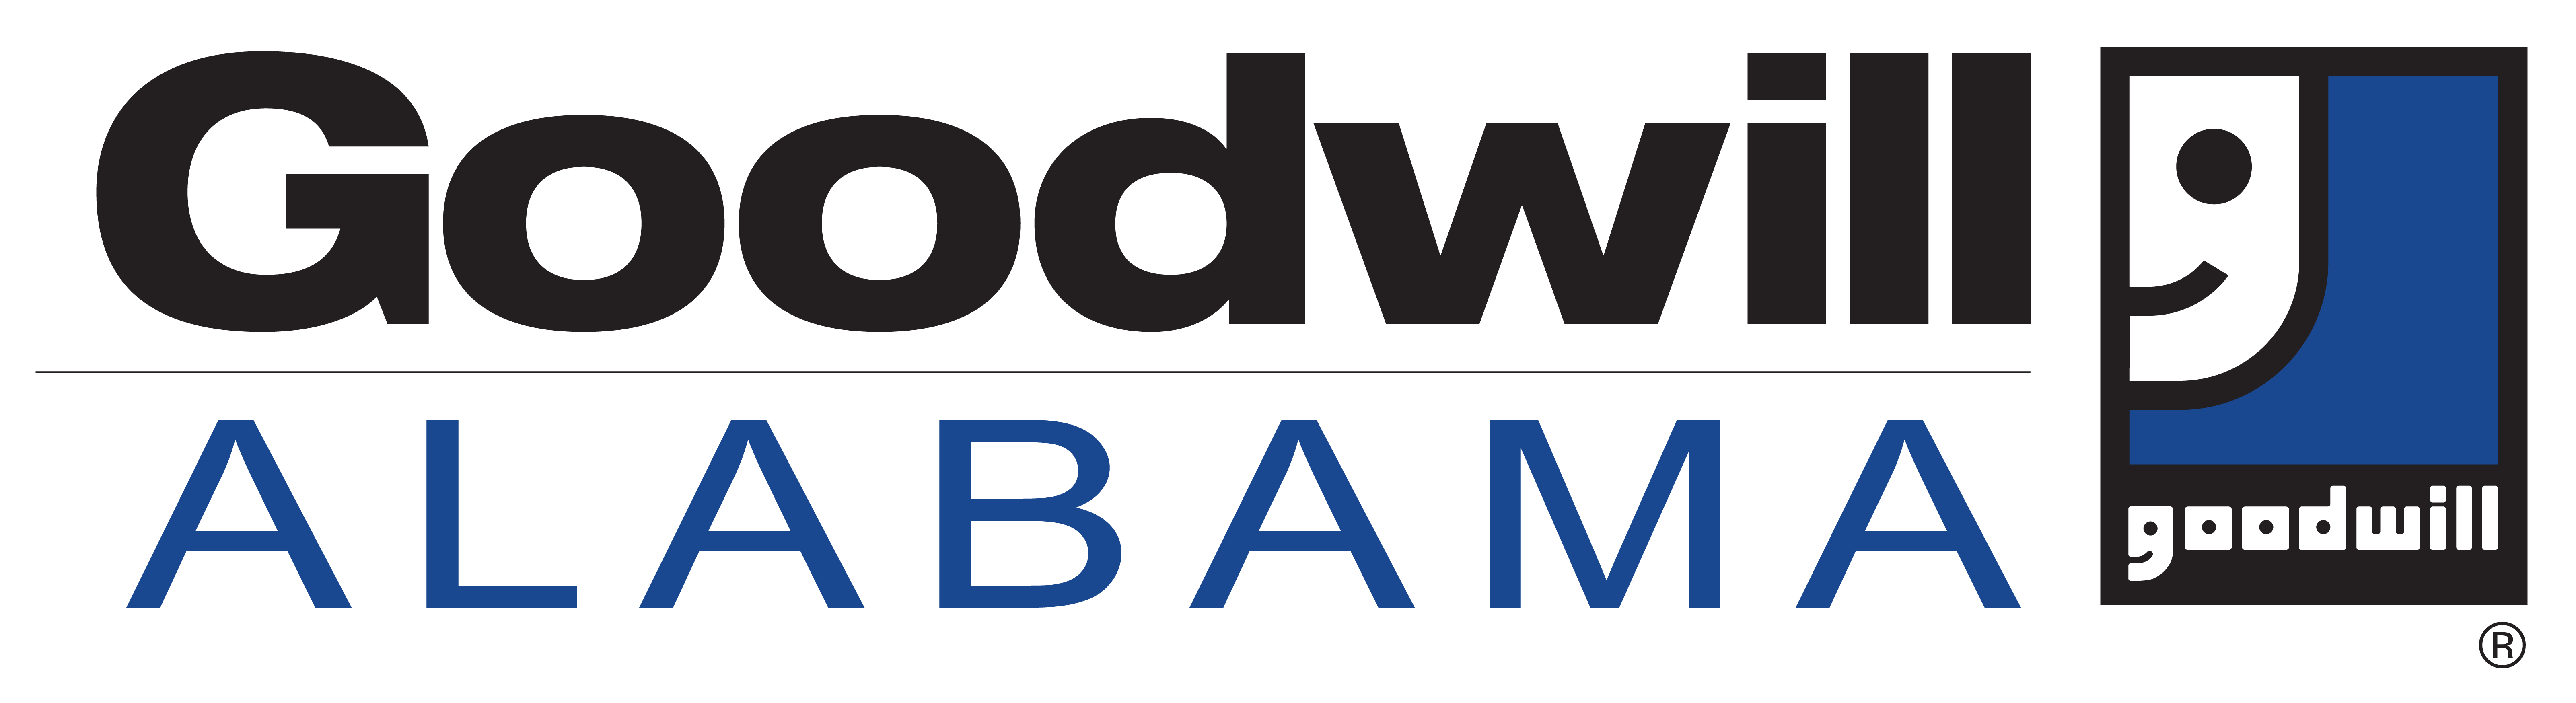 Alabama Goodwill Industries Logo